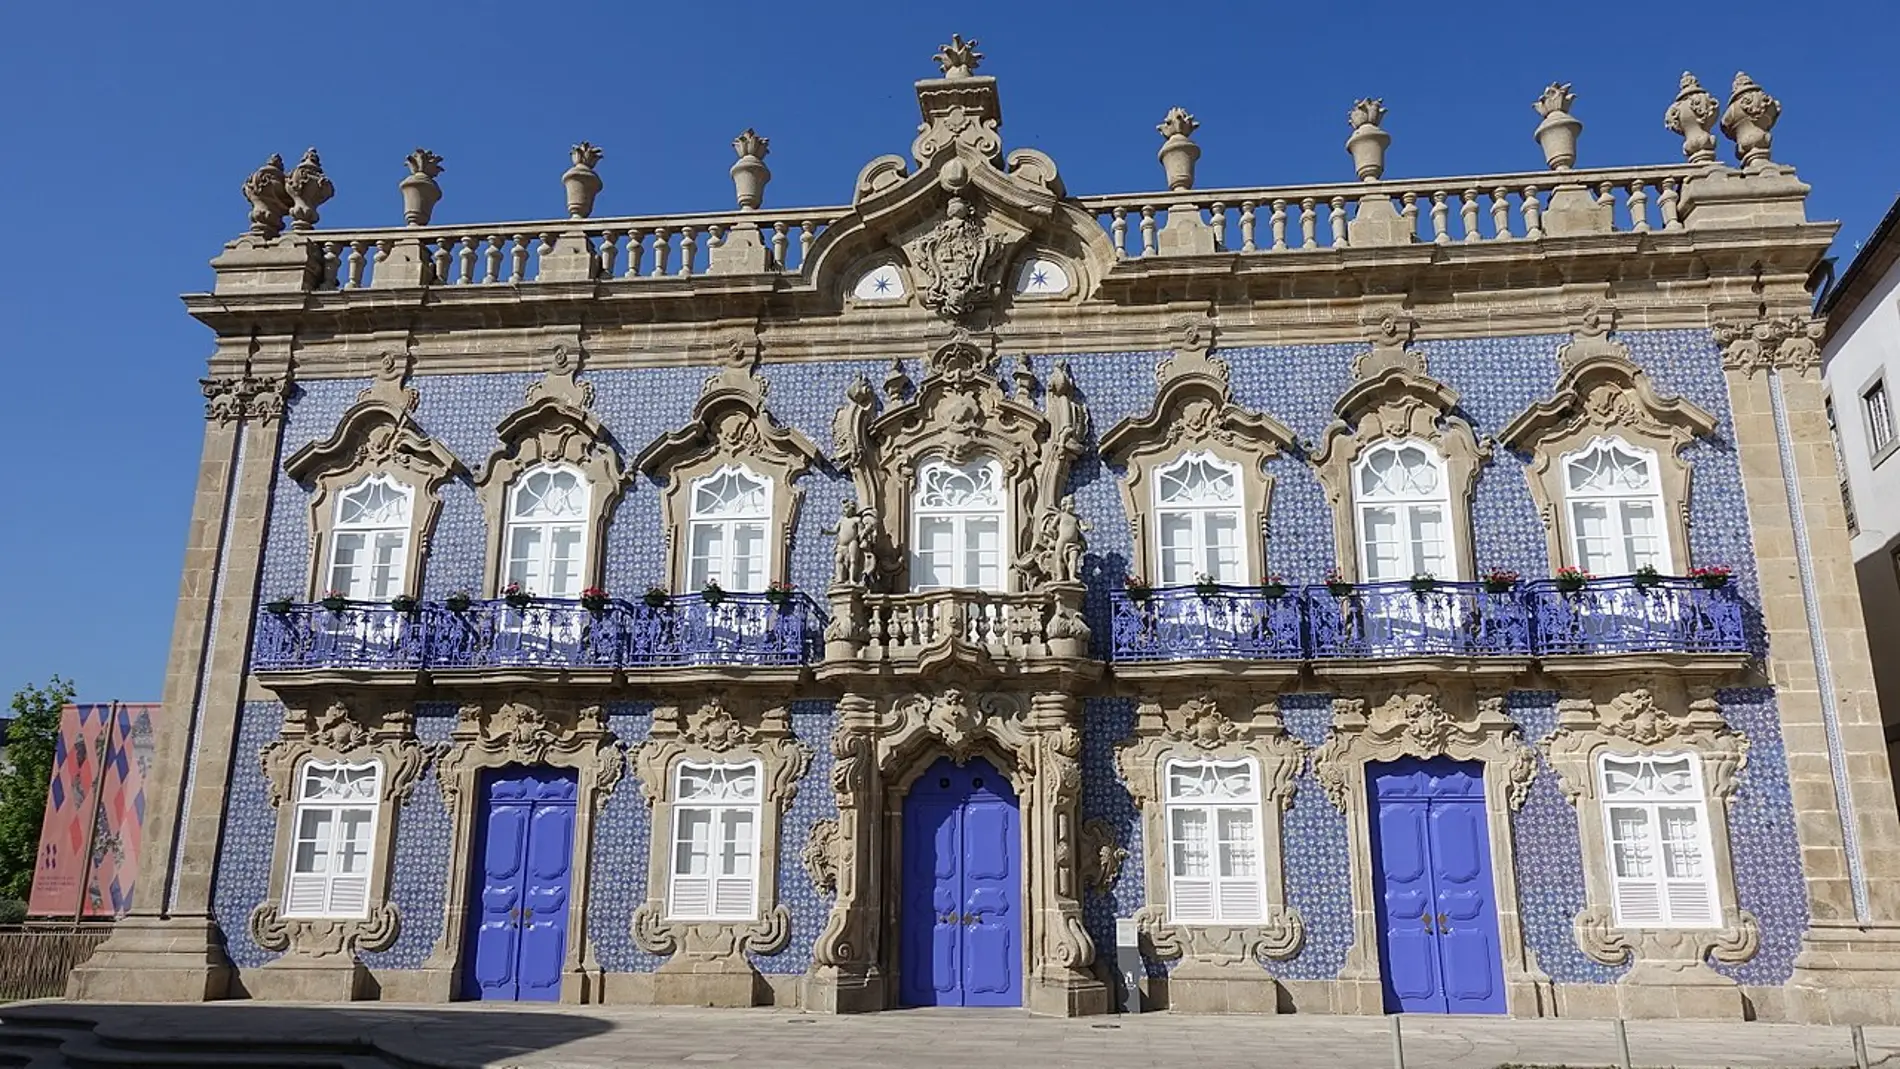 Palacio do Raio de Braga: ¿sabías que también es conocido como “Casa do Mexicano”?